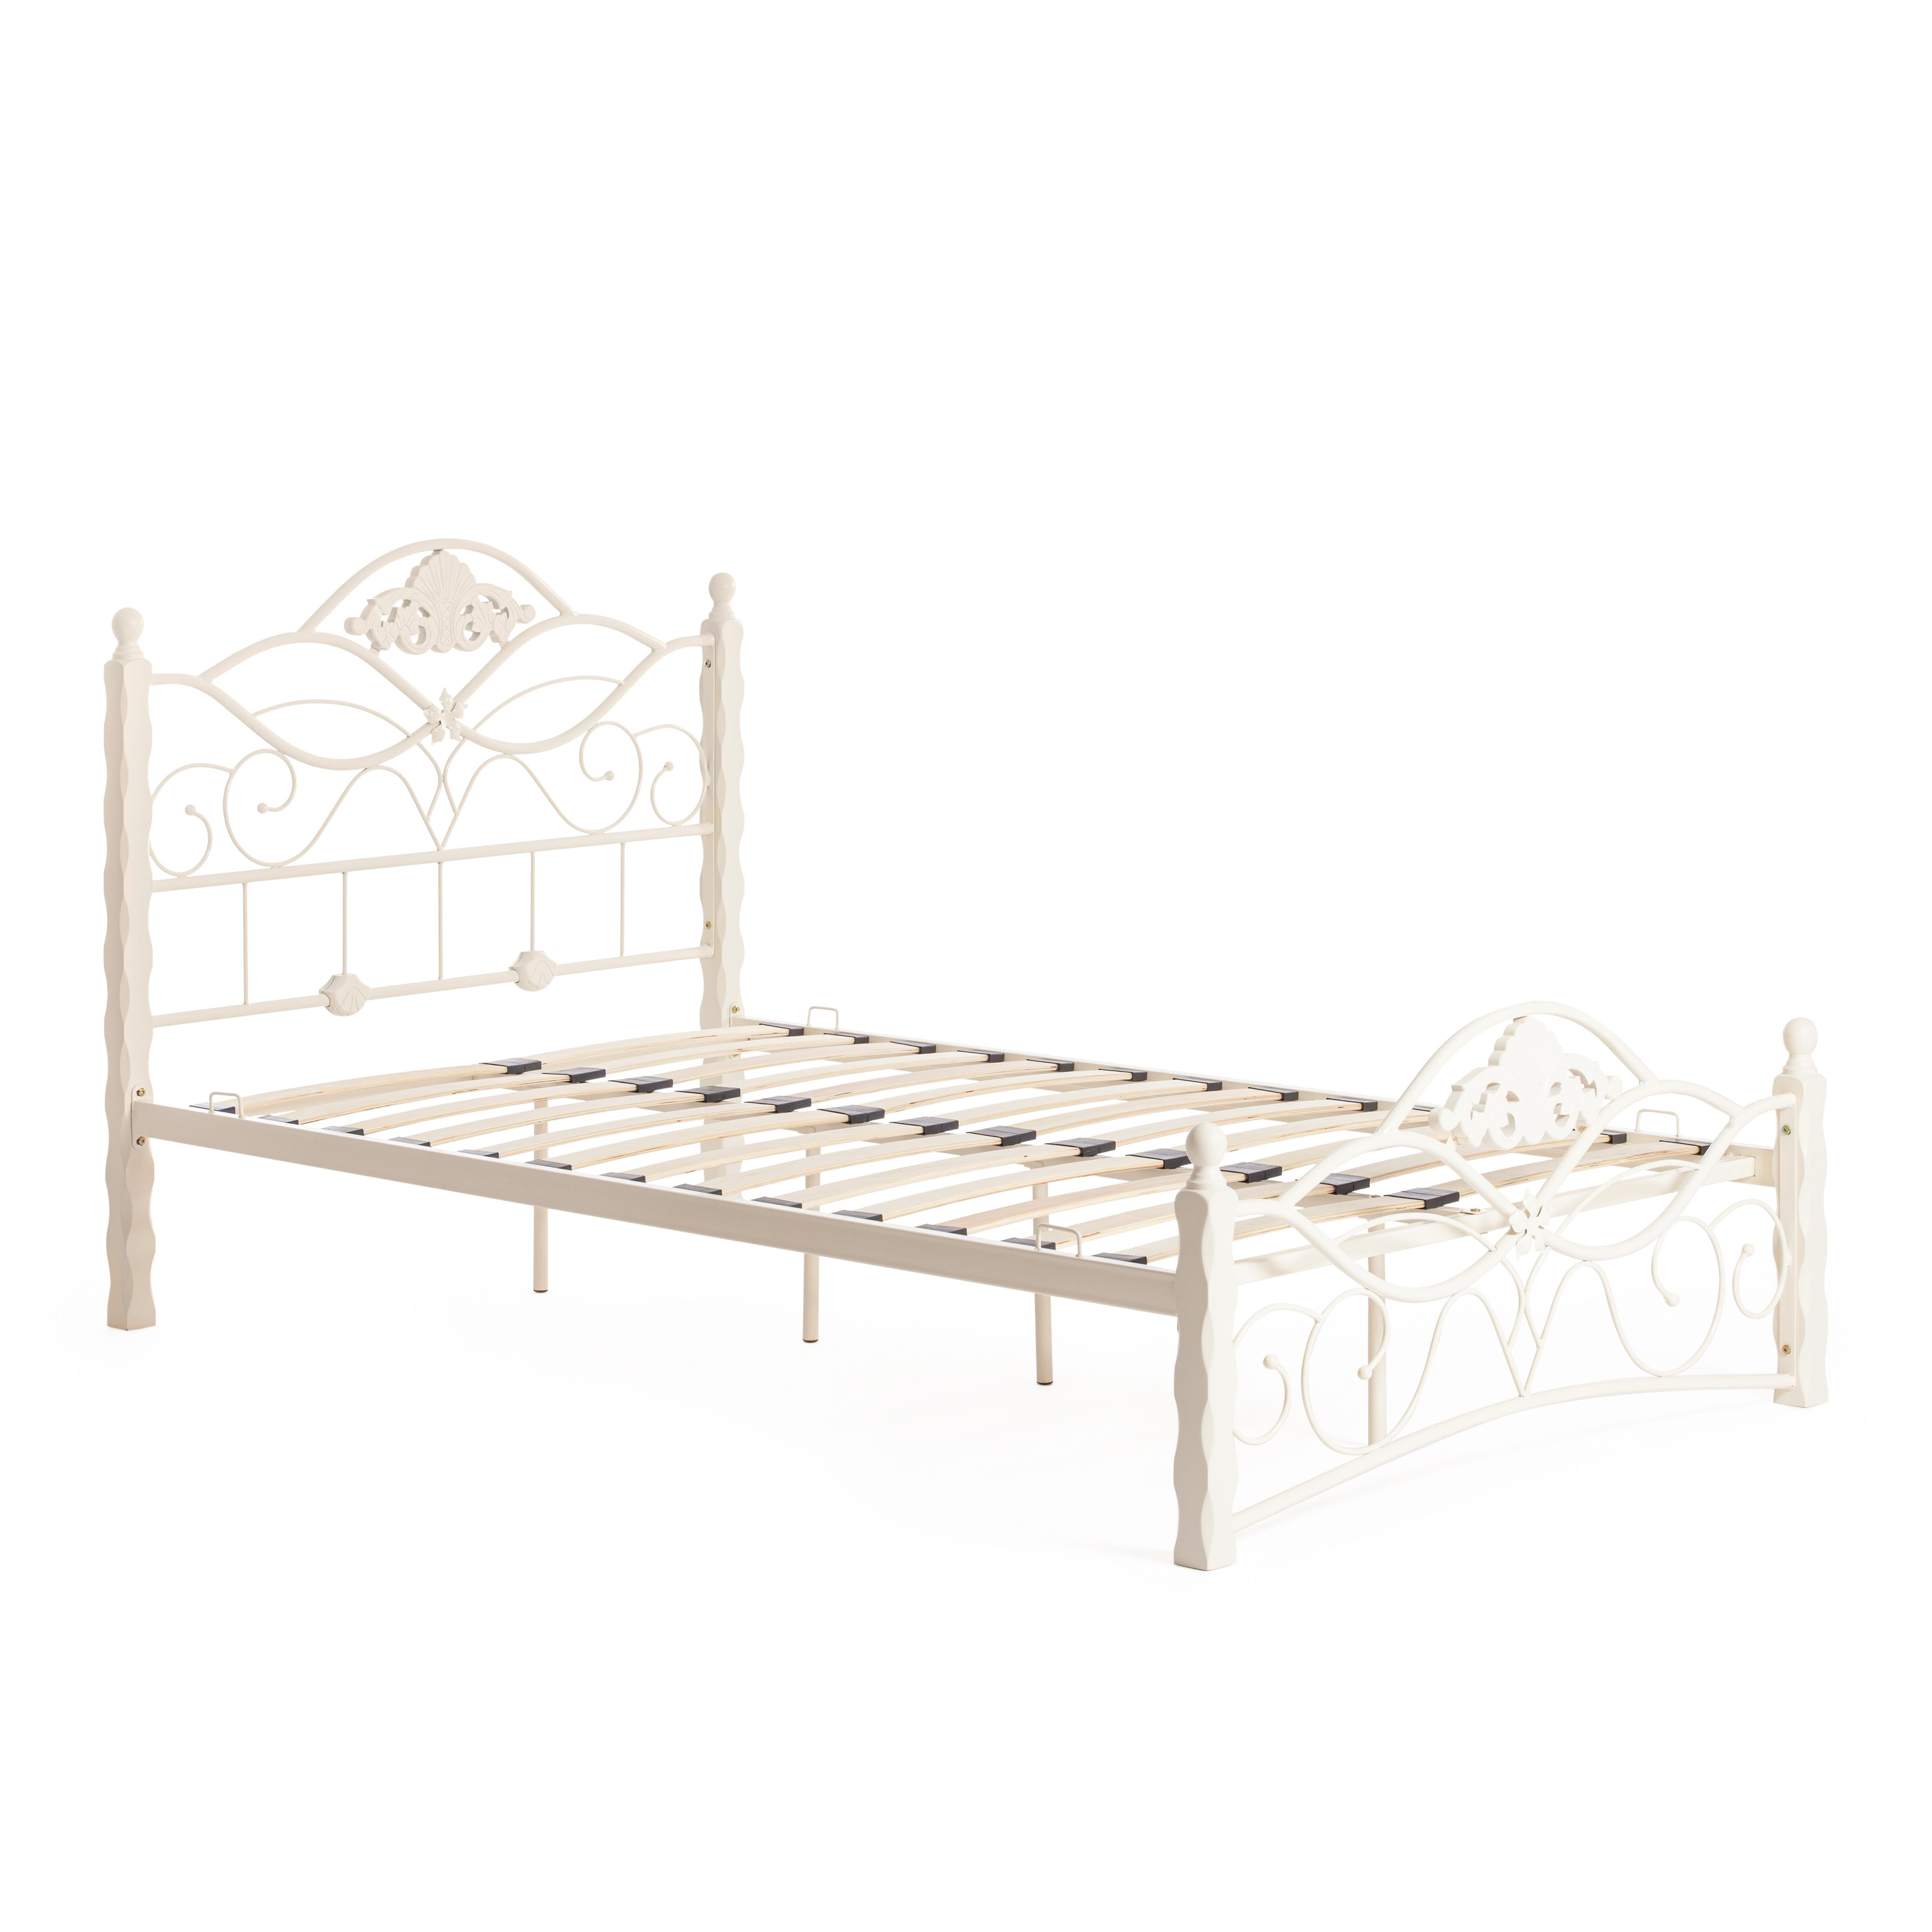 Кровать CANZONA Wood slat base дерево гевея/металл, 140*200 см (Double bed), Белый (butter white)